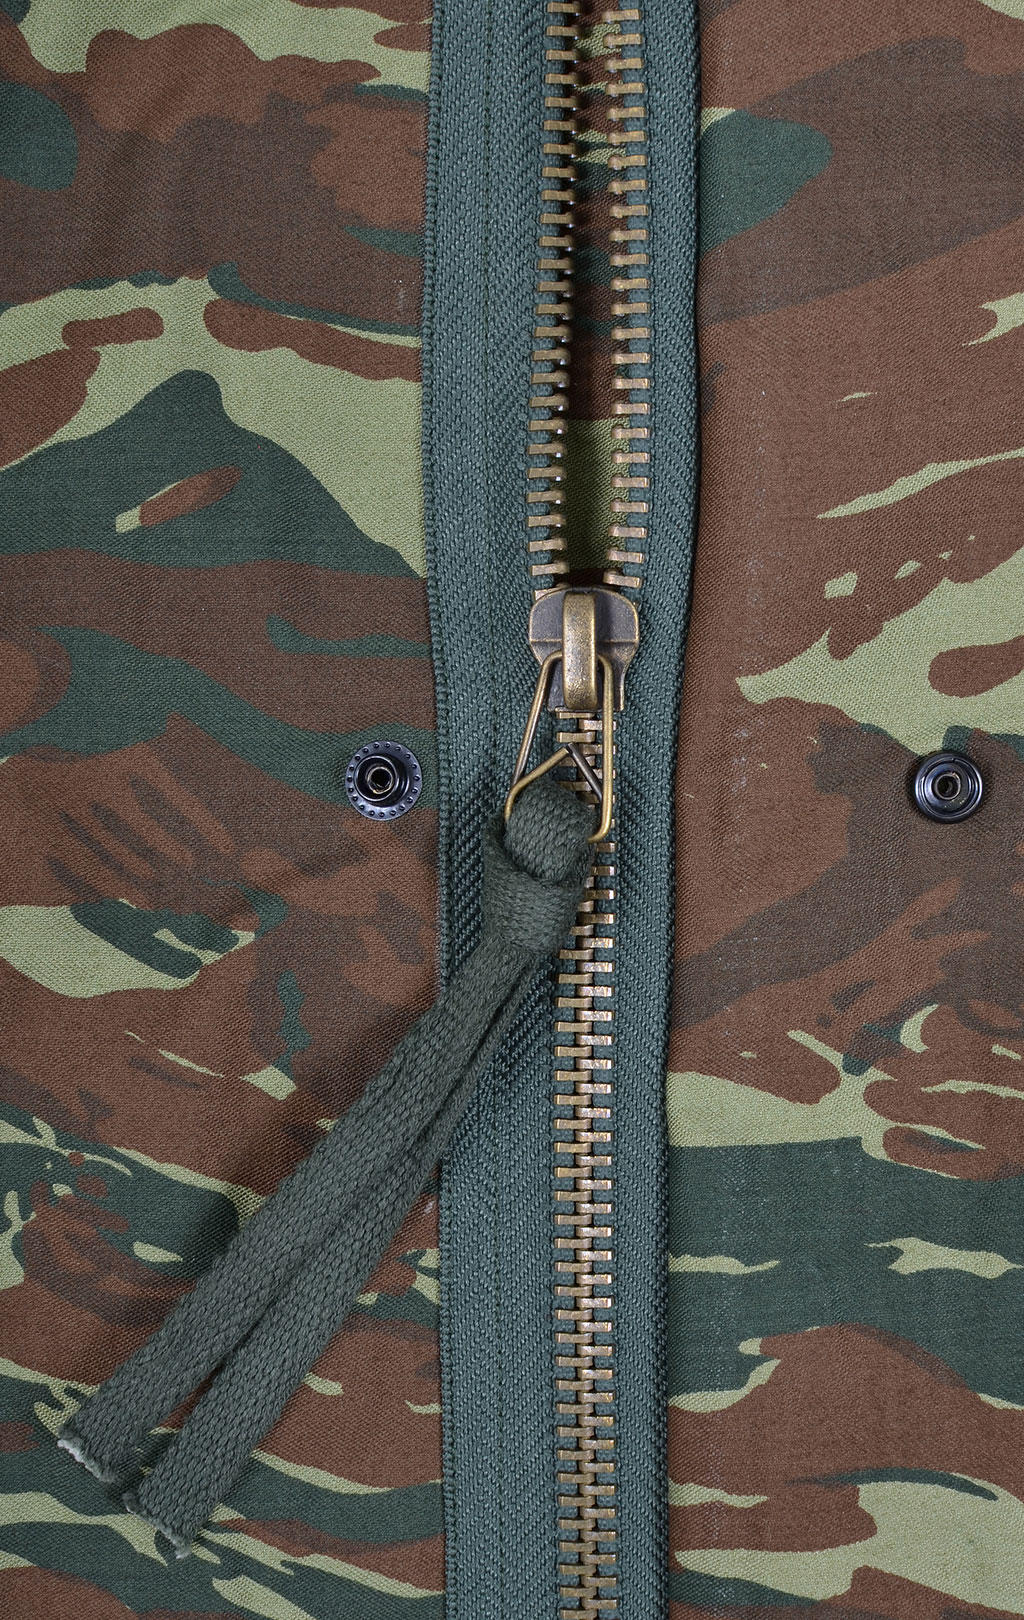 Куртка Pentagon M-65 CLASSIC хлопок/нейлон camo greece 0203 